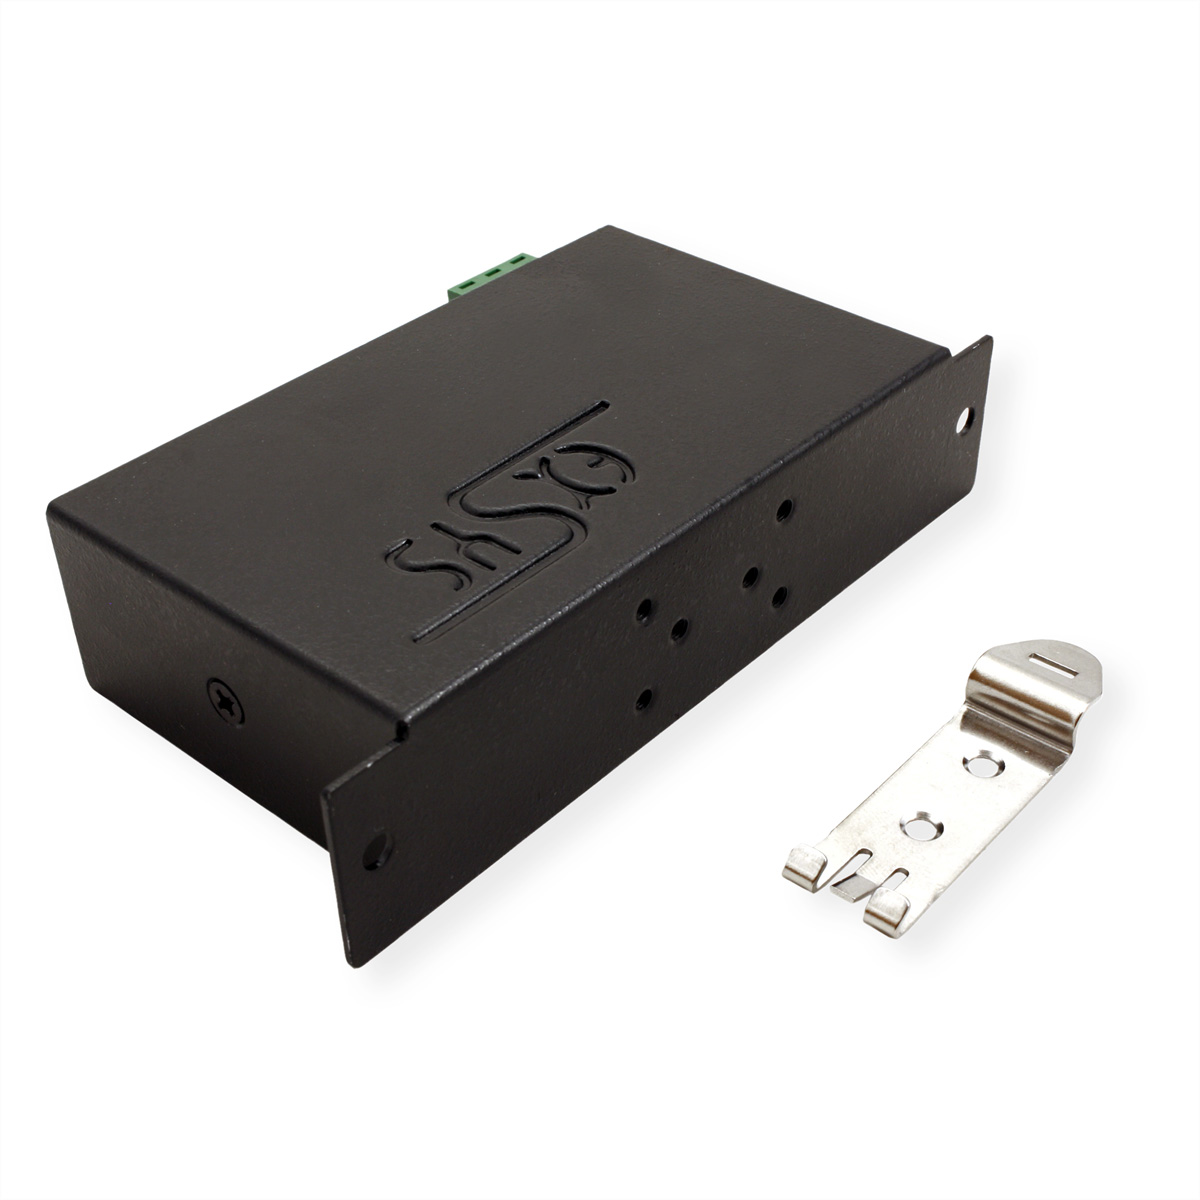 EXSYS EX-1163HMS-WT 4 port USB 2.0 HUB  Surge Protection und erweiterter Temperaturber